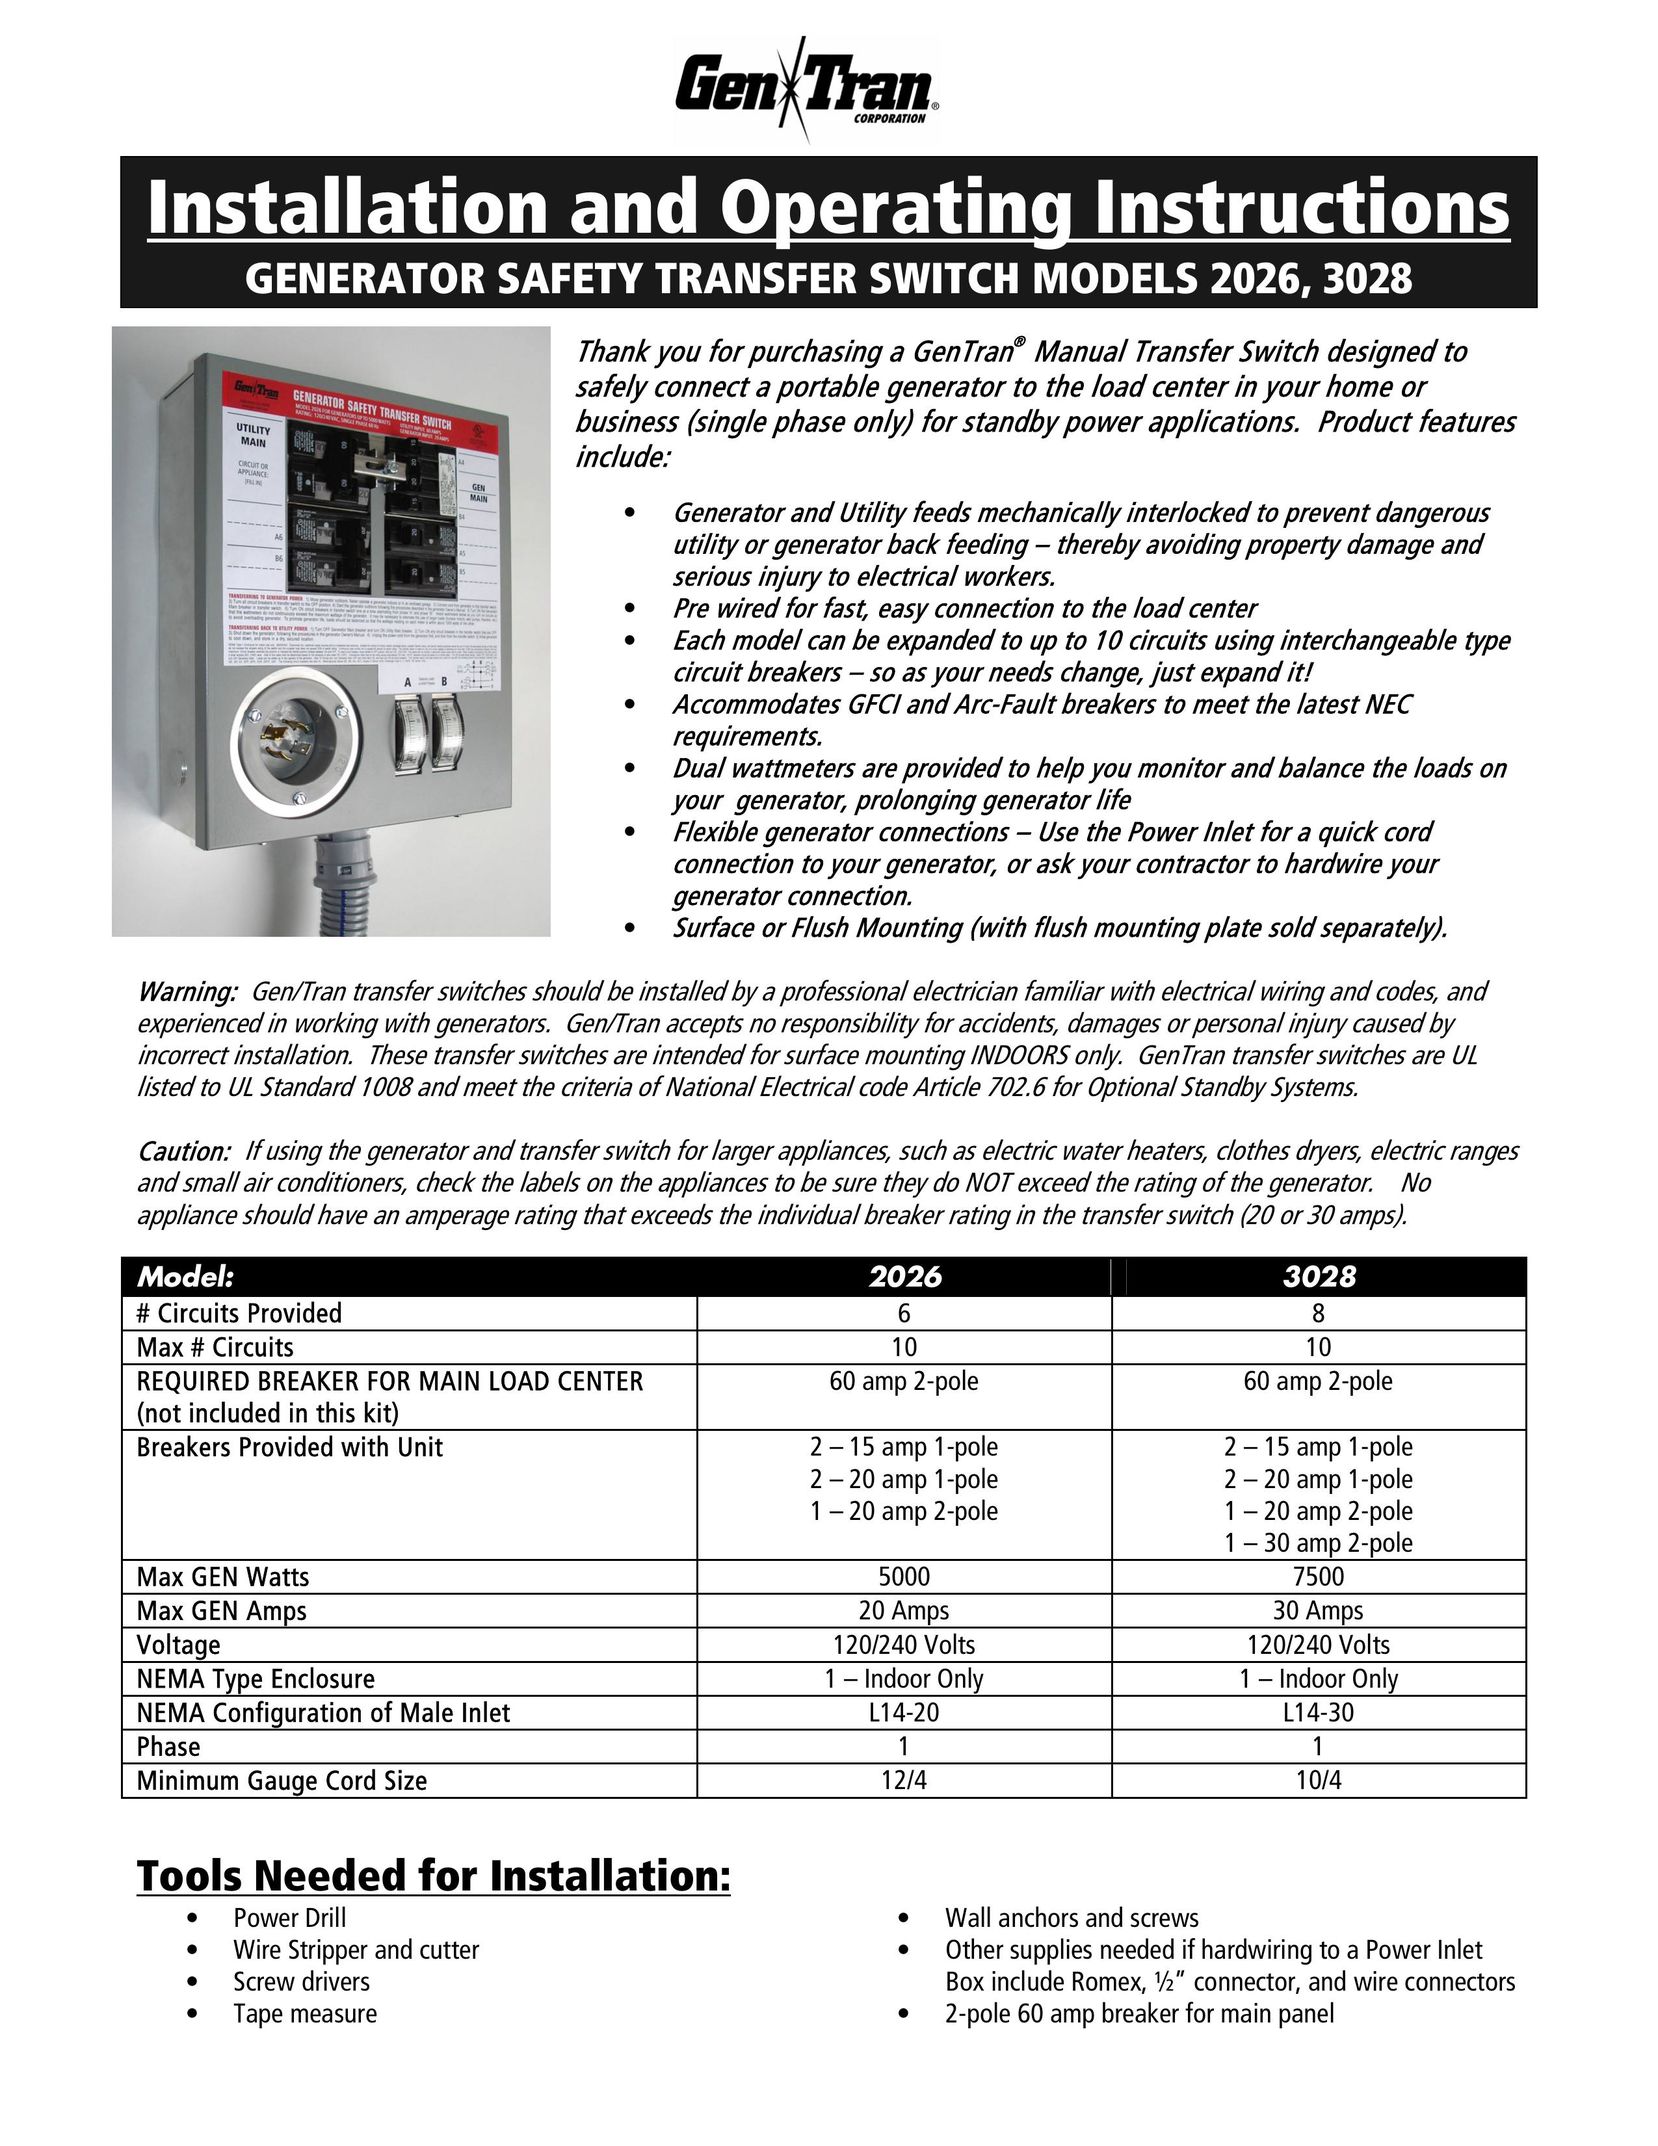 GenTran 3028 Switch User Manual